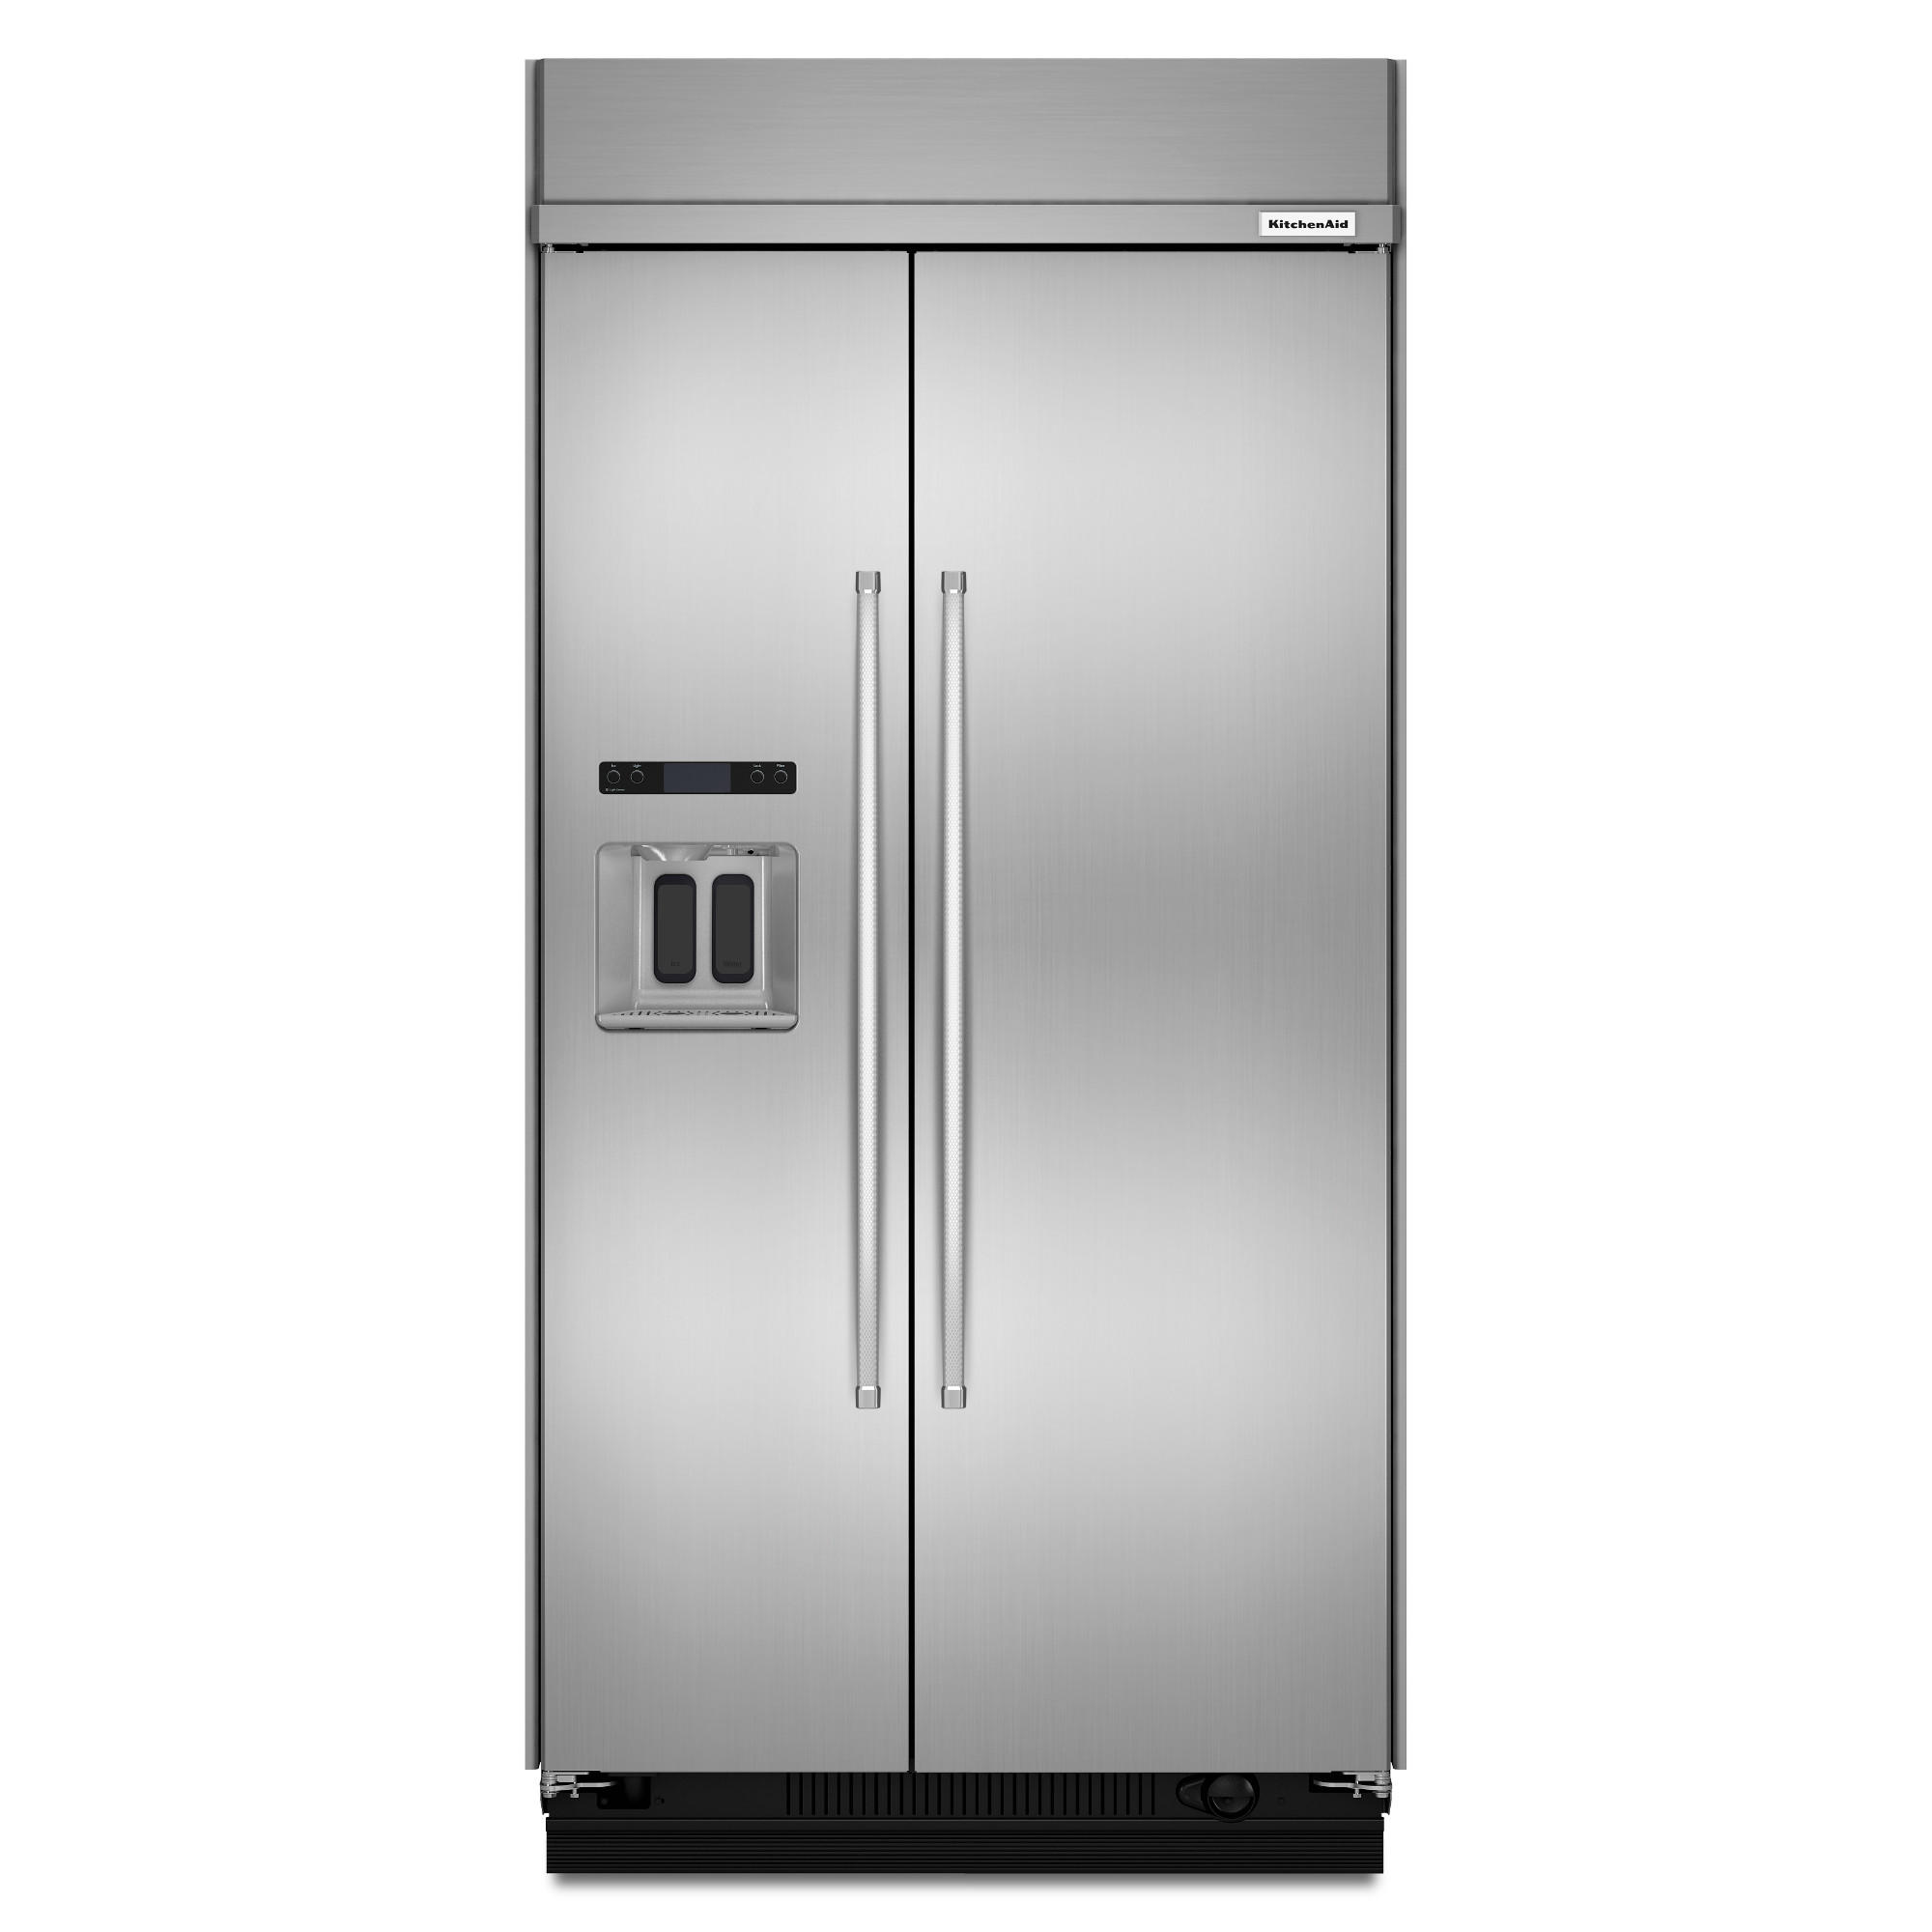 KitchenAid KBSD608ESS 29.5 cu. ft. Built-In Refrigerator - Stainless Steel